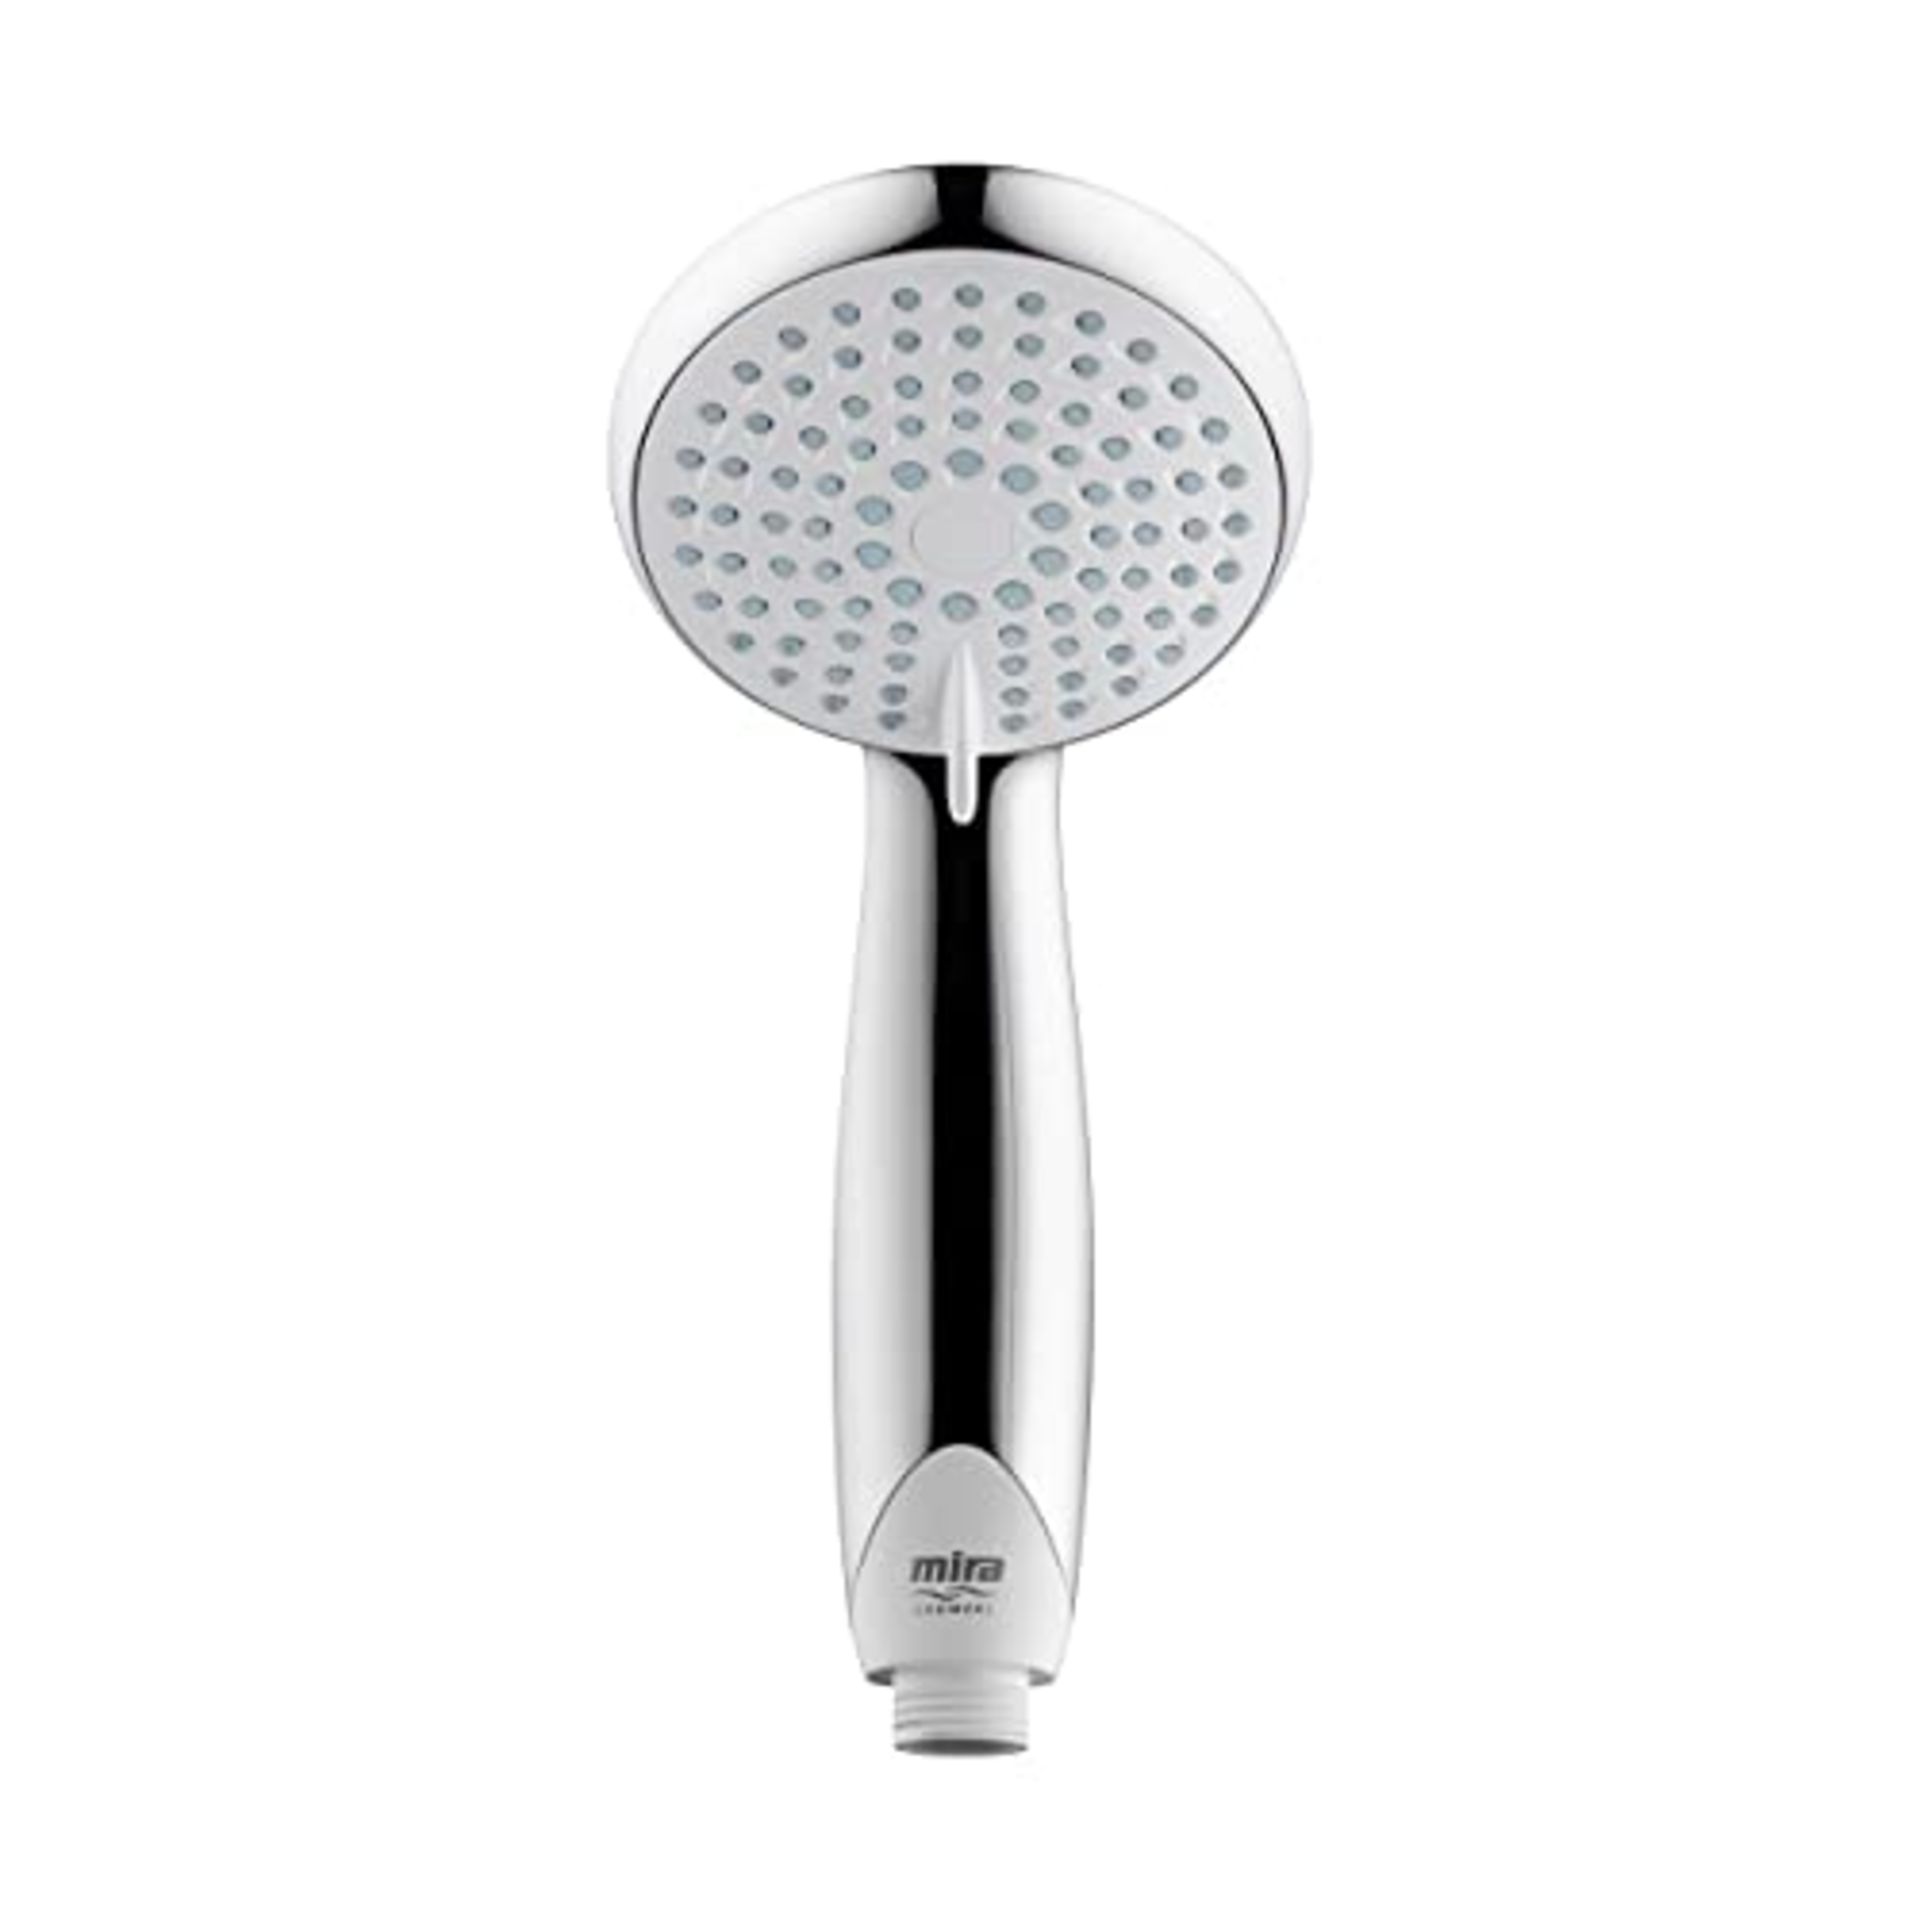 Mira Showers Nectar Shower Head 4 Spray Shower Head 90 mm Chrome 2.1703.004